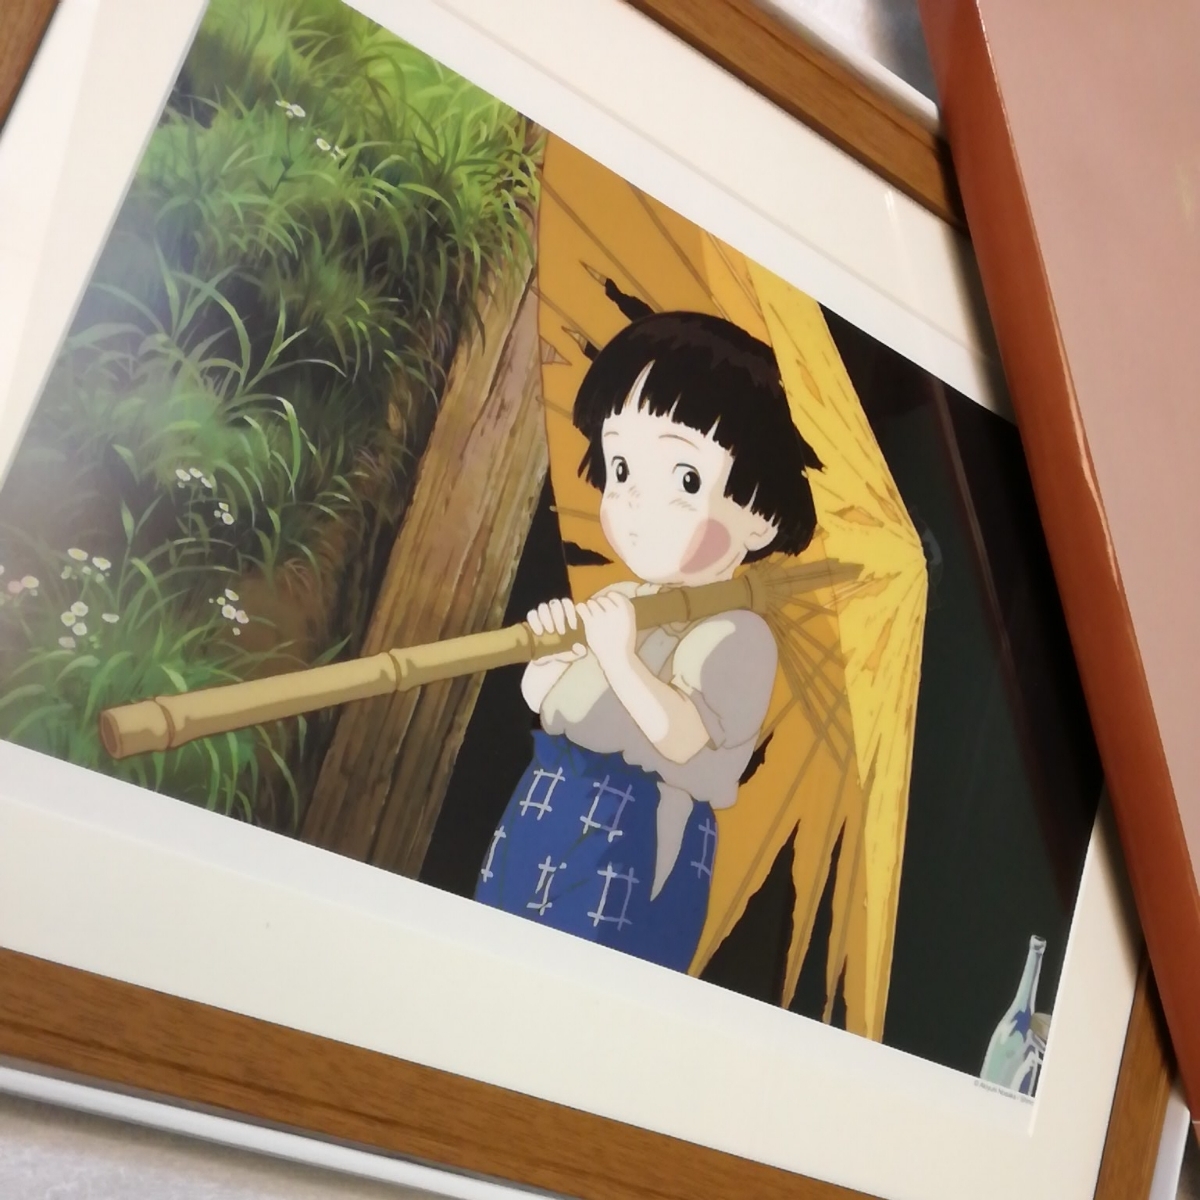 Super rare! Studio Ghibli Grave of the Fireflies [Framed Item] Poster Wall Hanging Painting Postcard Reproduction Original Ghibli Calendar Hayao Miyazaki Isao Takahata, comics, anime goods, others